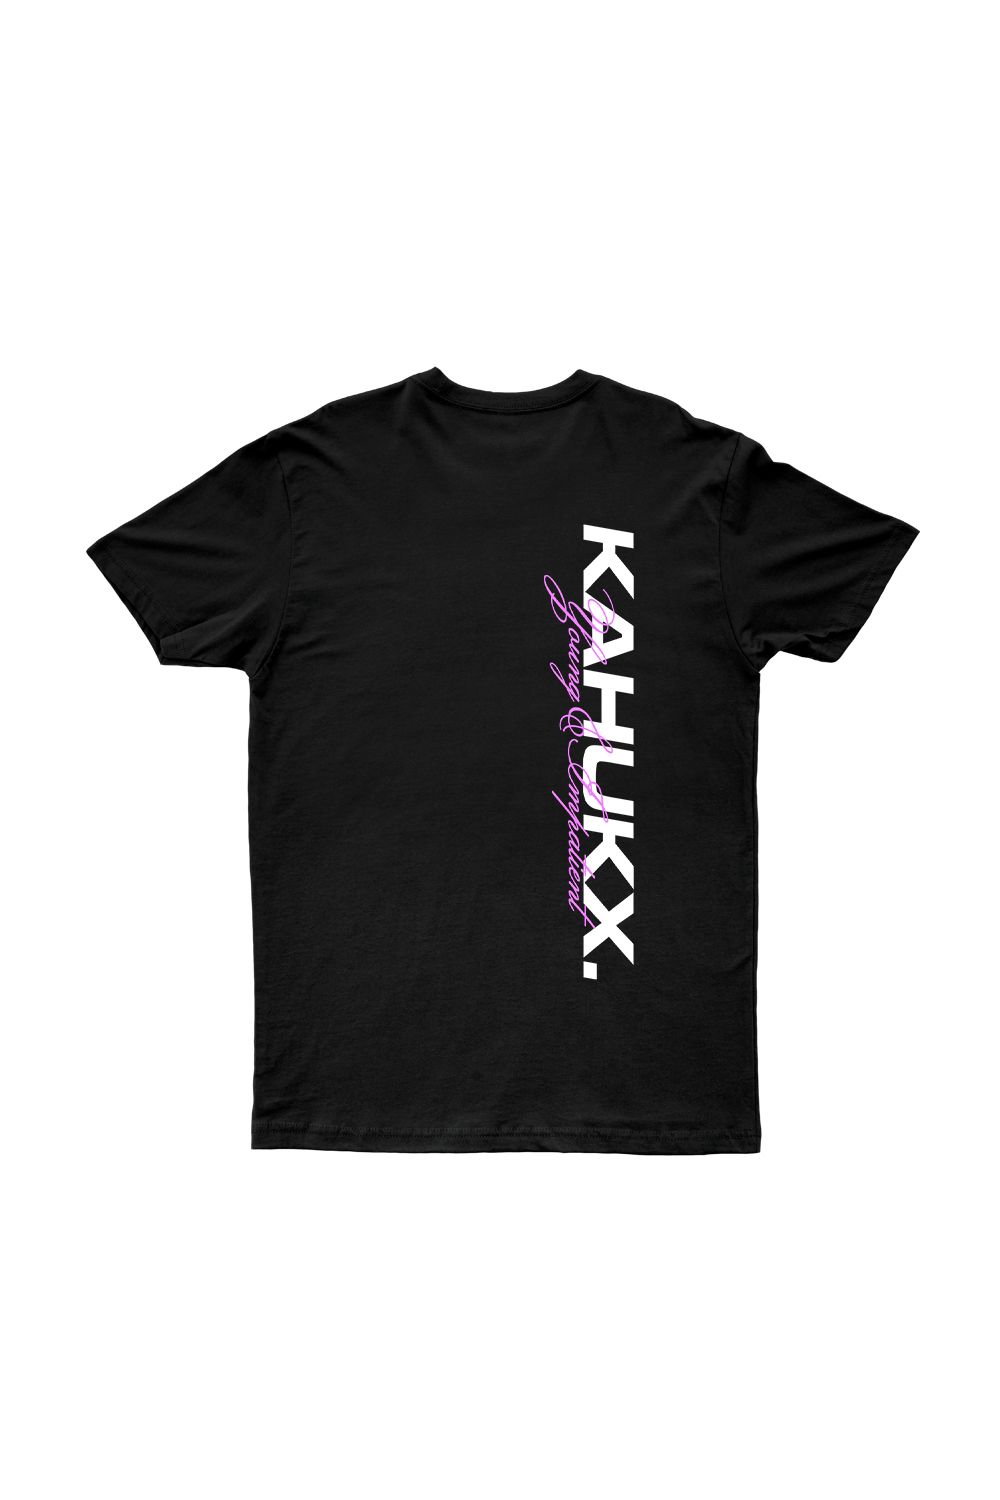 KAHUKX — KAHUKX Official Merchandise